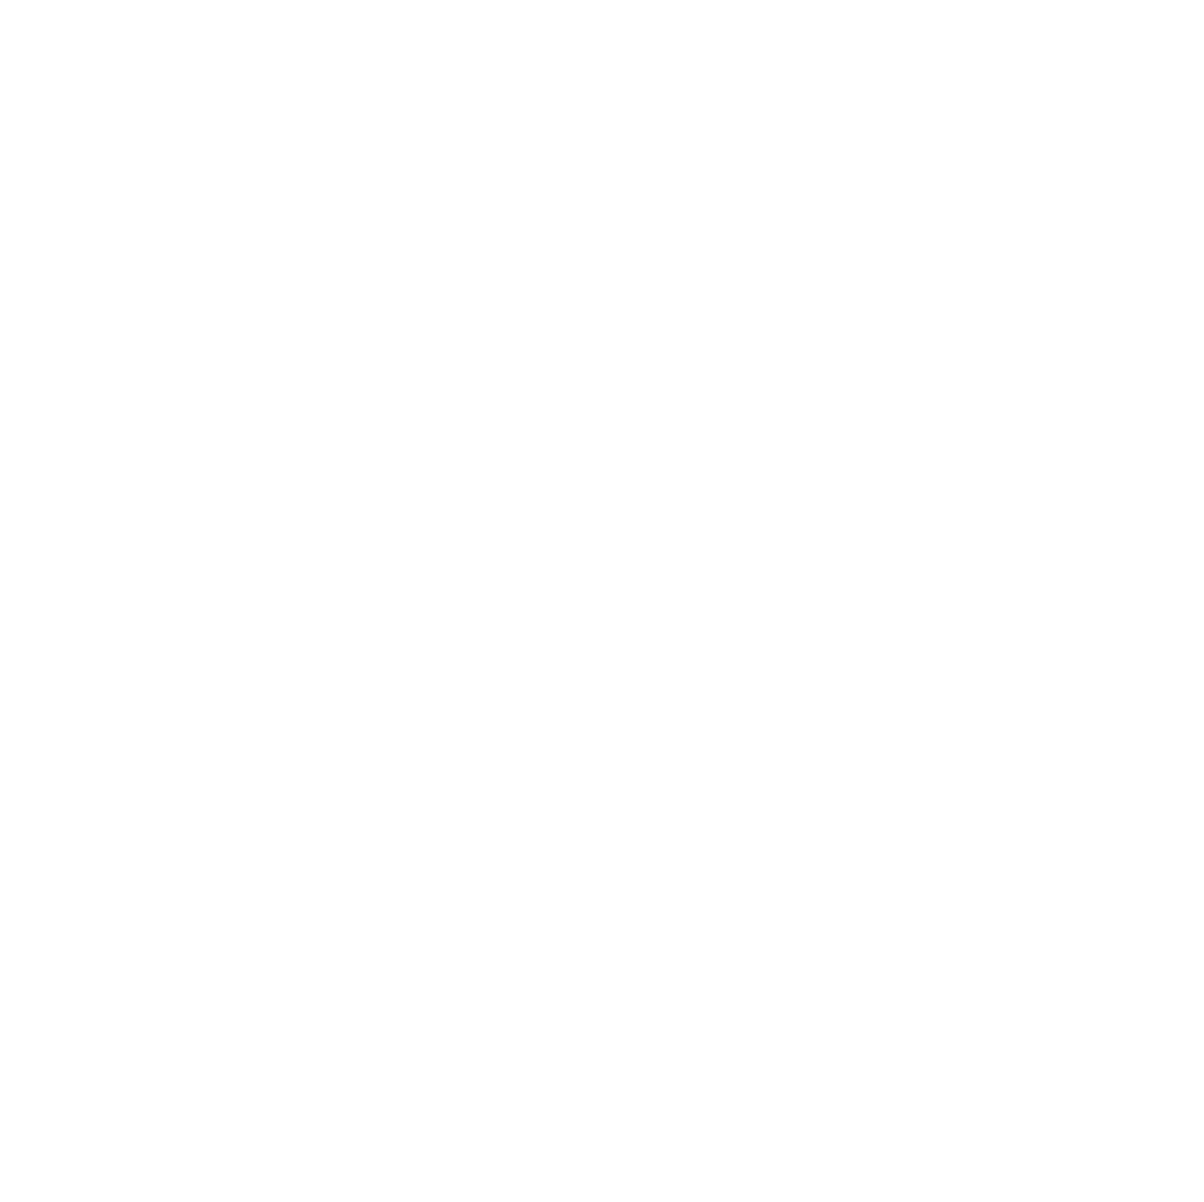 Robert E. Engel Associate Dean of Students, Cornell University